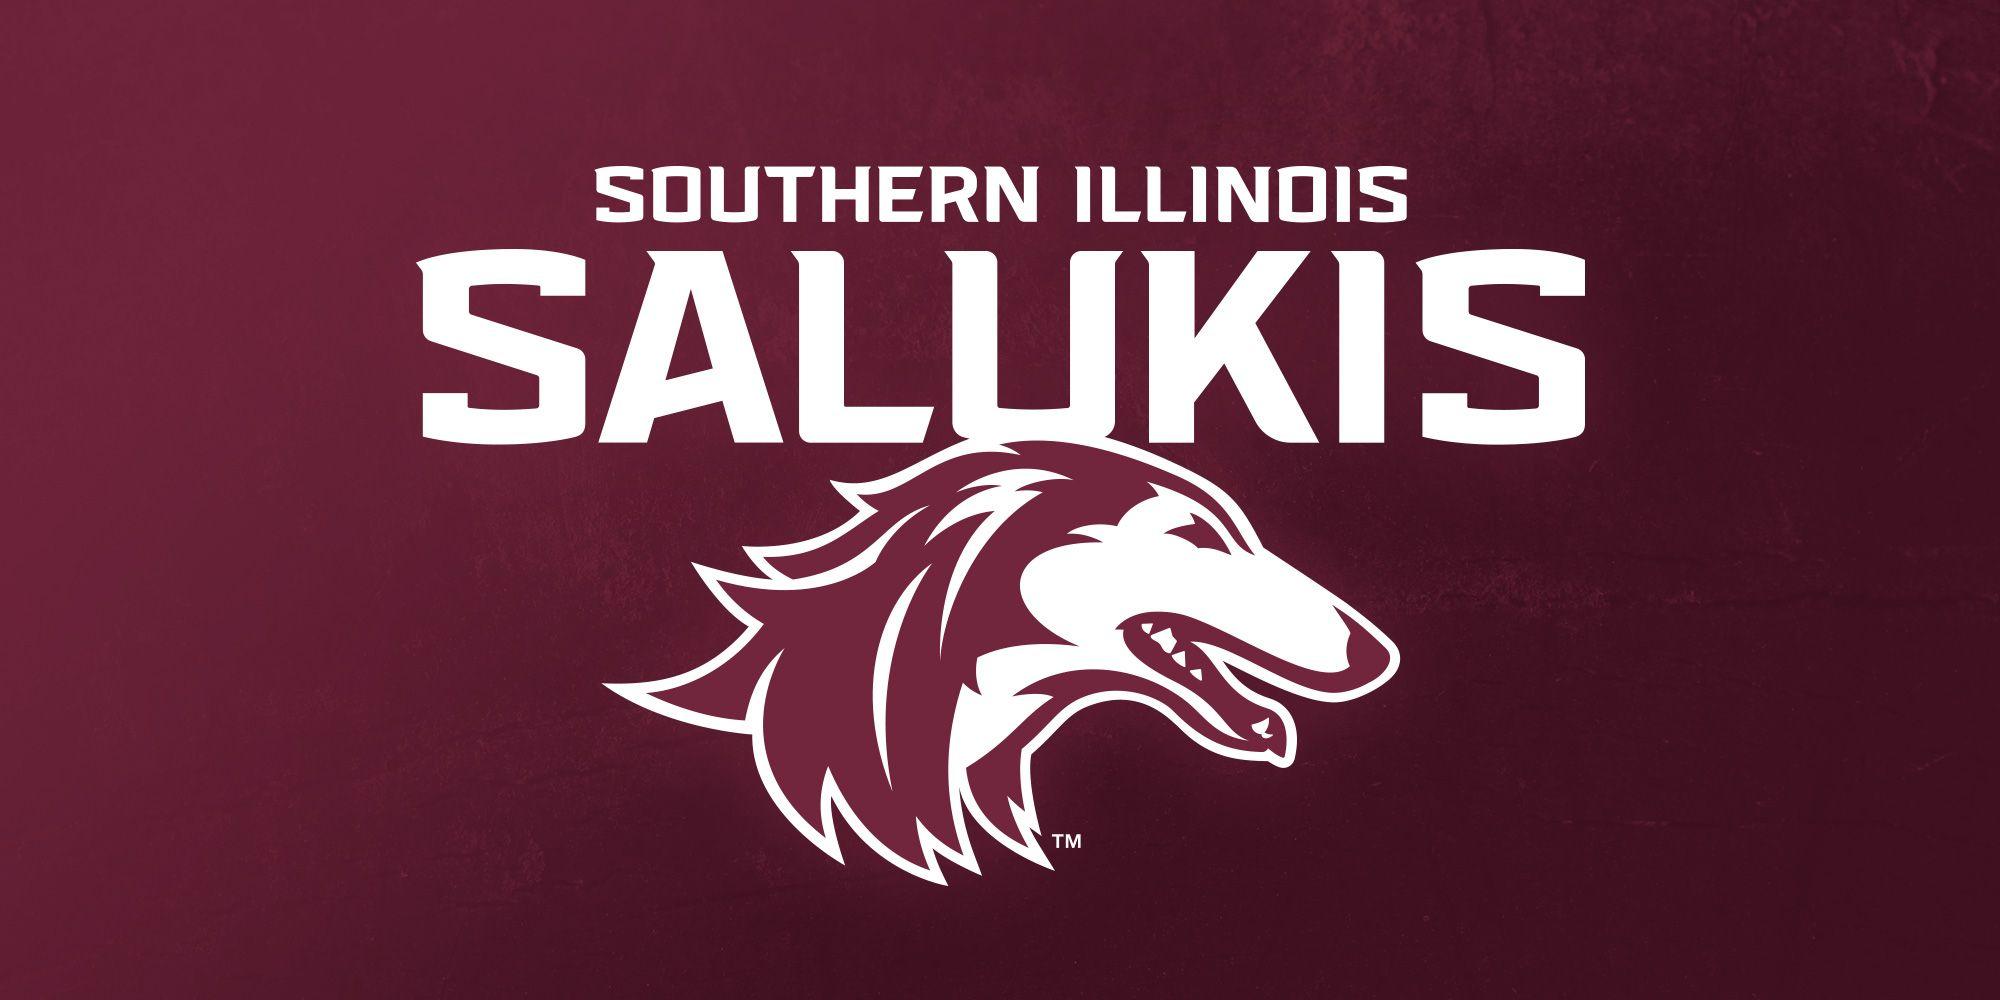 Siu Logo - Saluki Athletics unveils new logo - Southern Illinois University ...